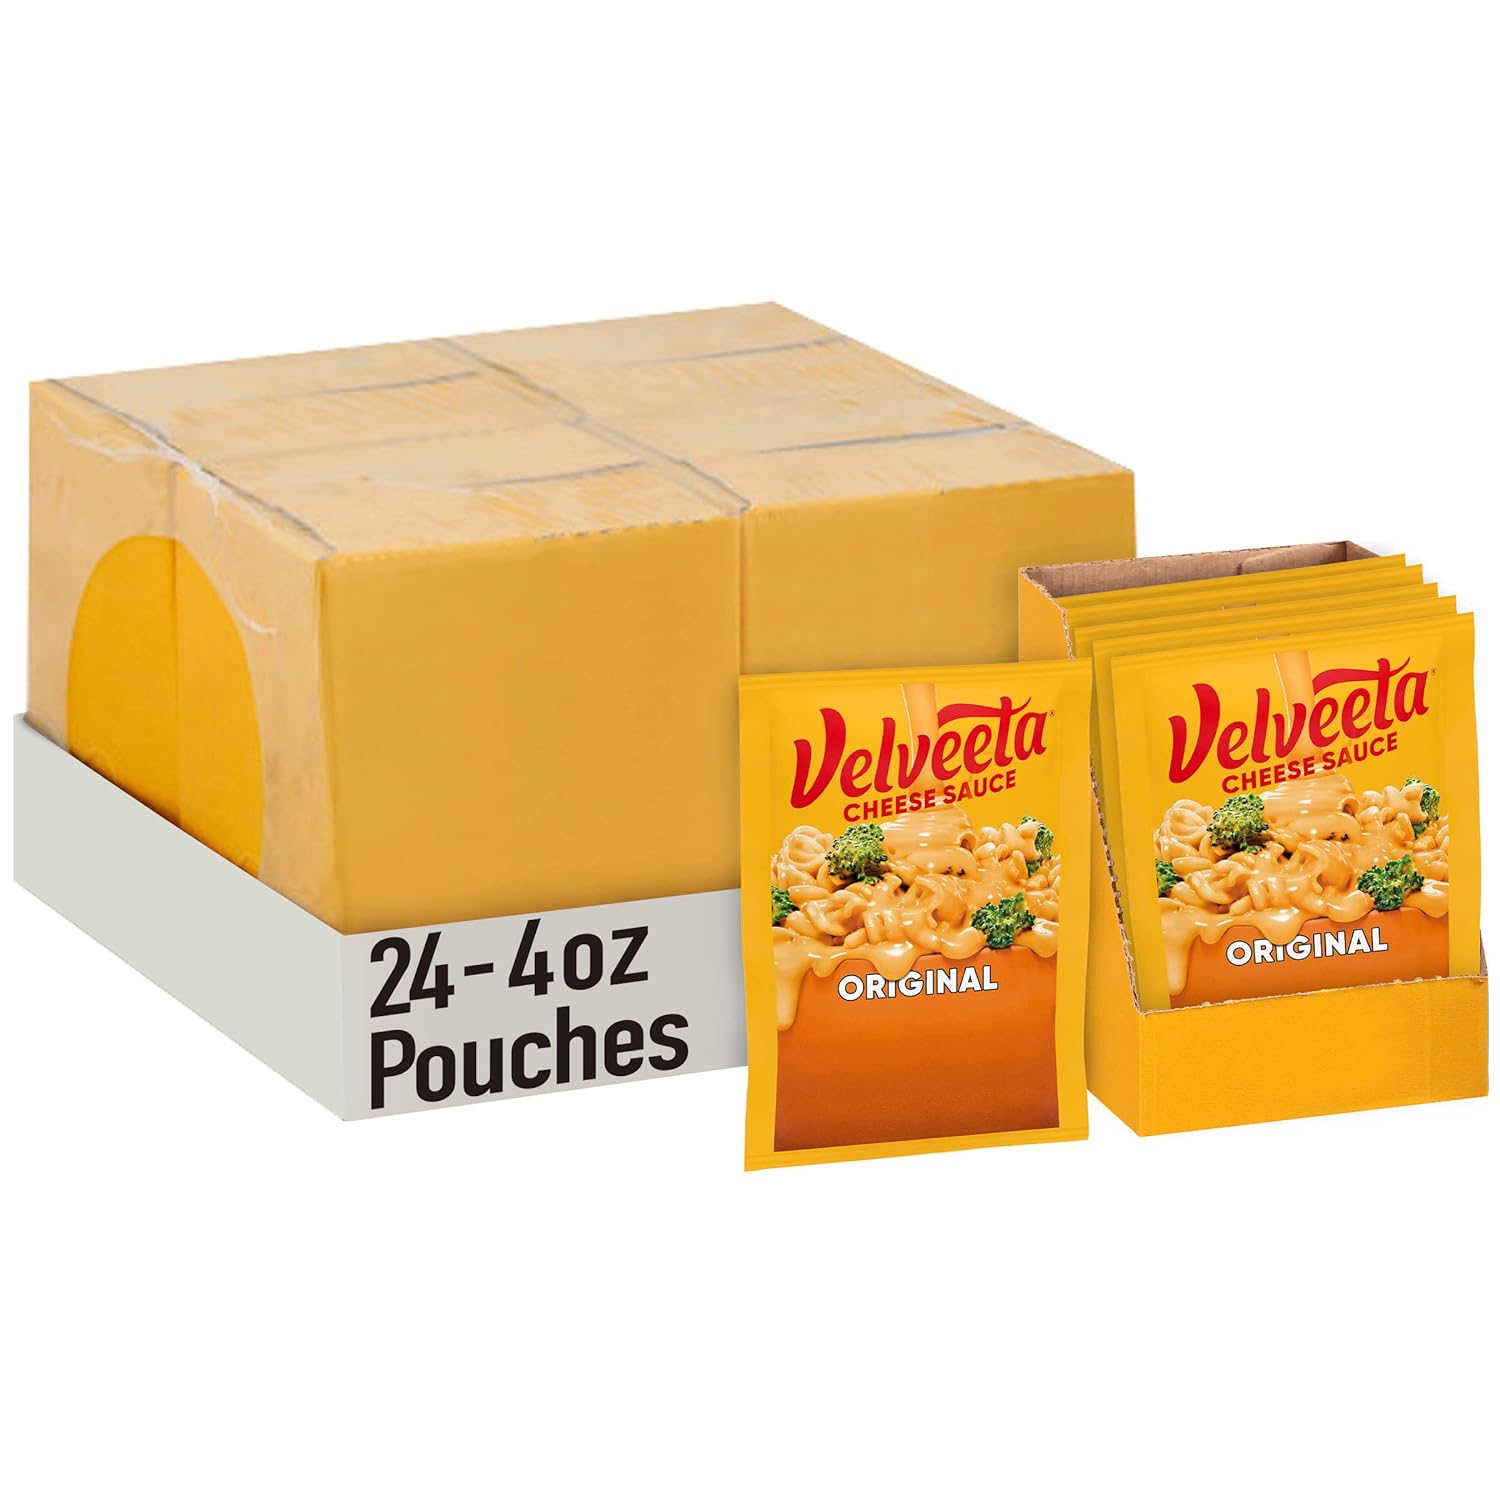 Velveeta Original Cheese Sauce Pouches (24 ct Pack, 4 Boxes of 6 Pouches)